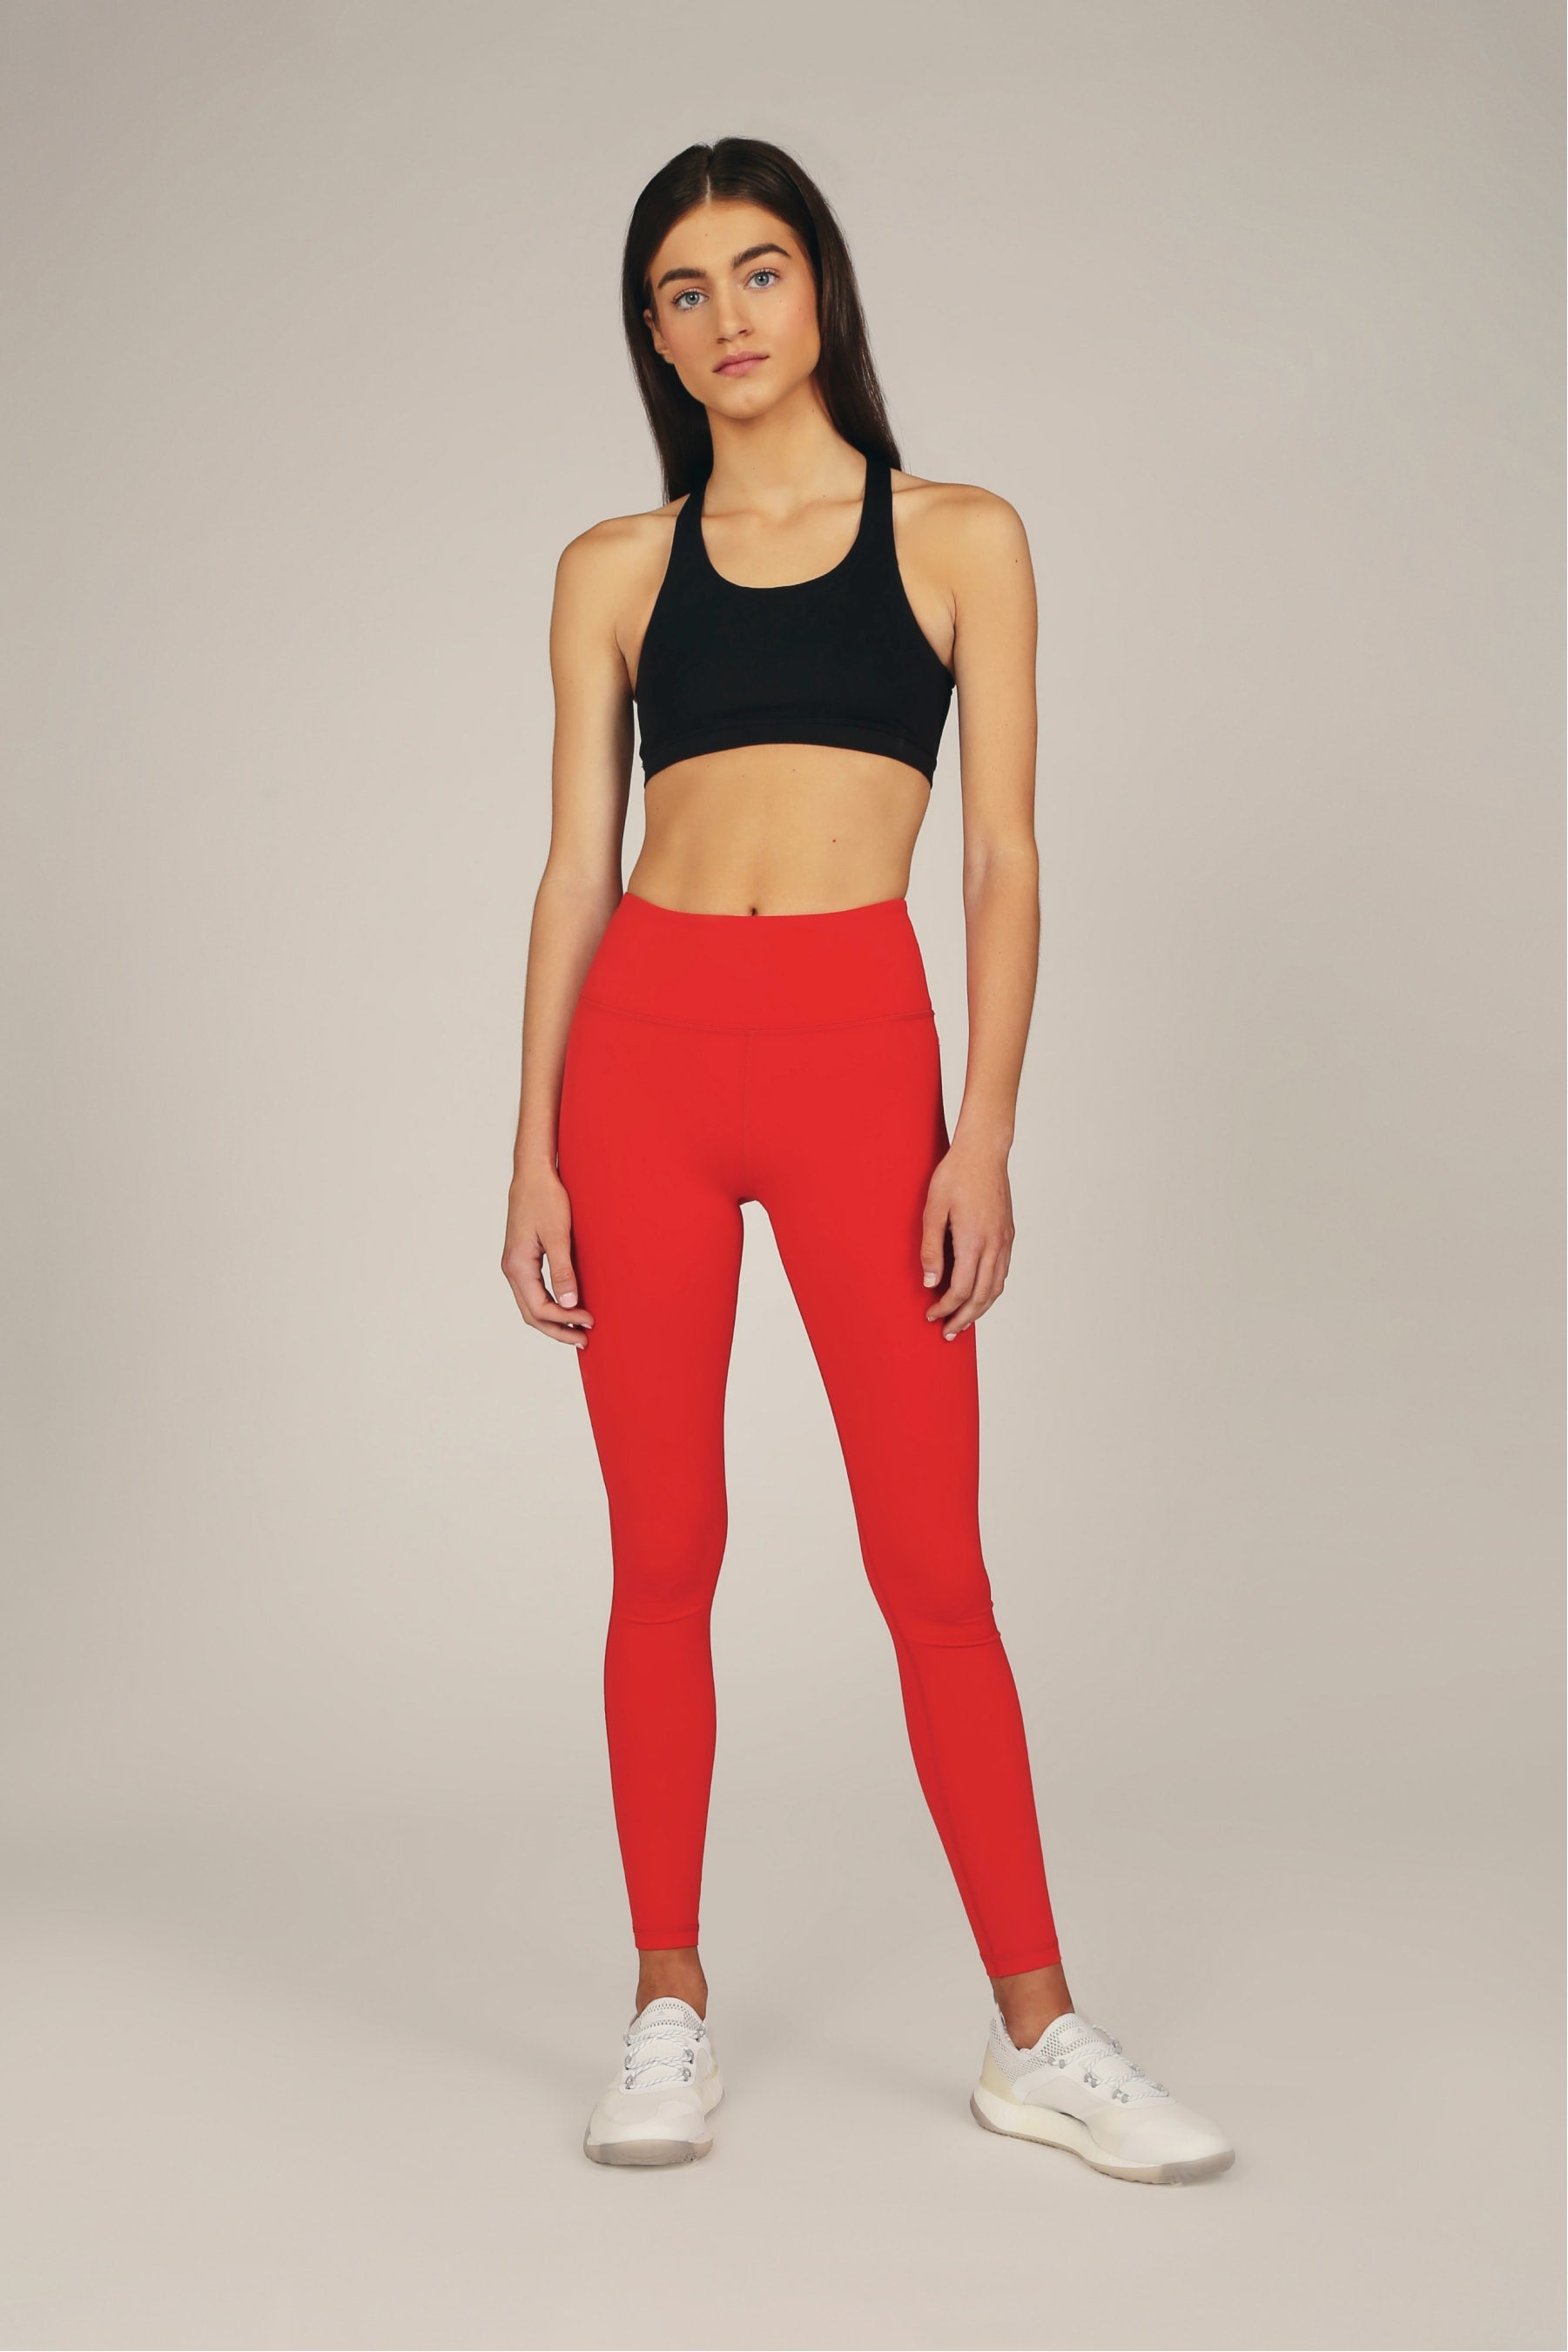 Premium Photo  Athletic Latina Model Wearing Red Leggings on